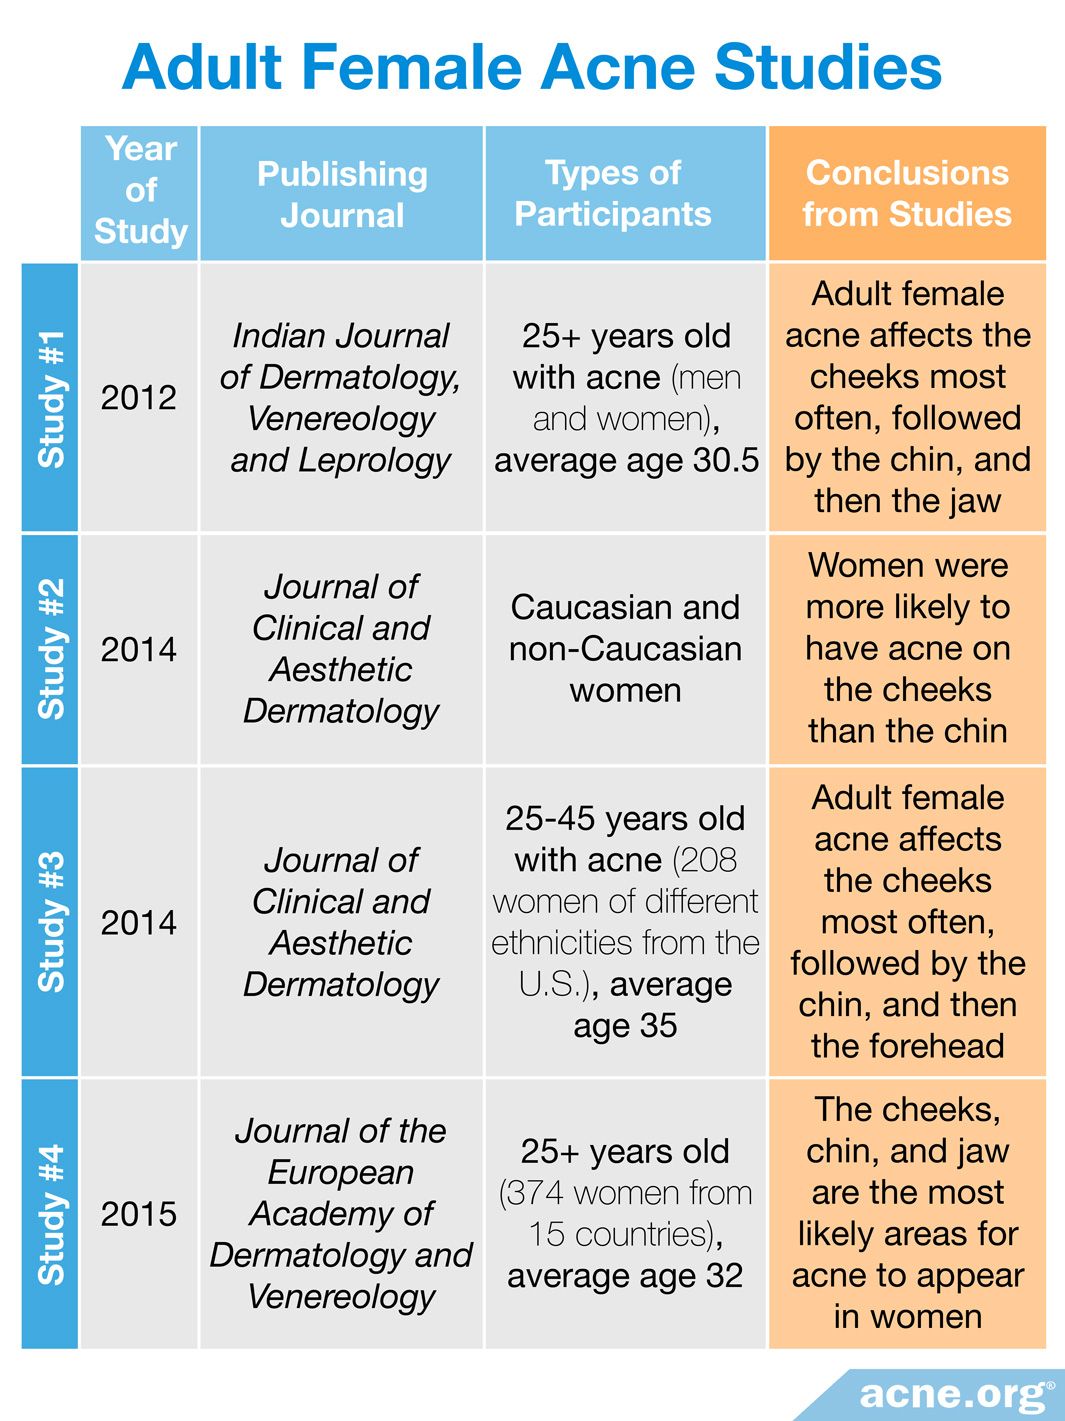 Adult female acne studies